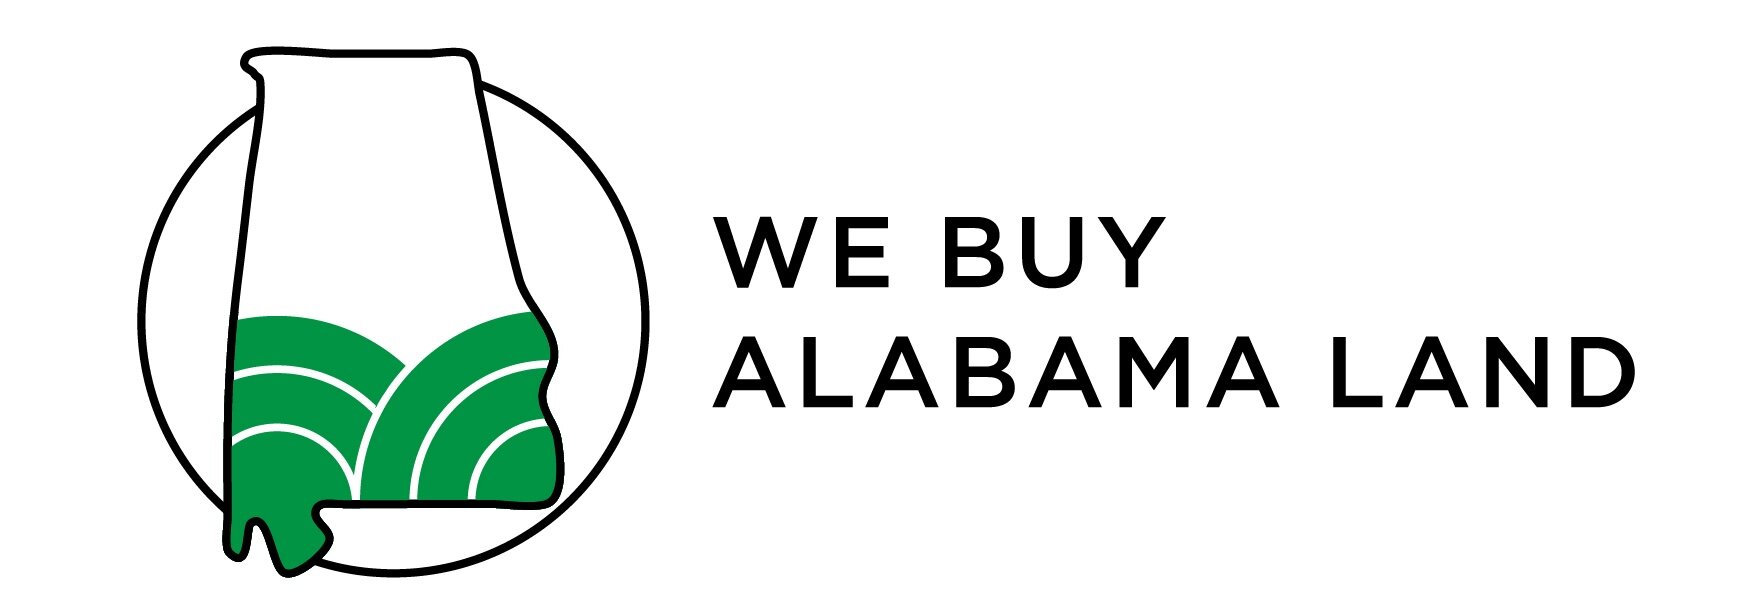 We Buy Alabama Land logo